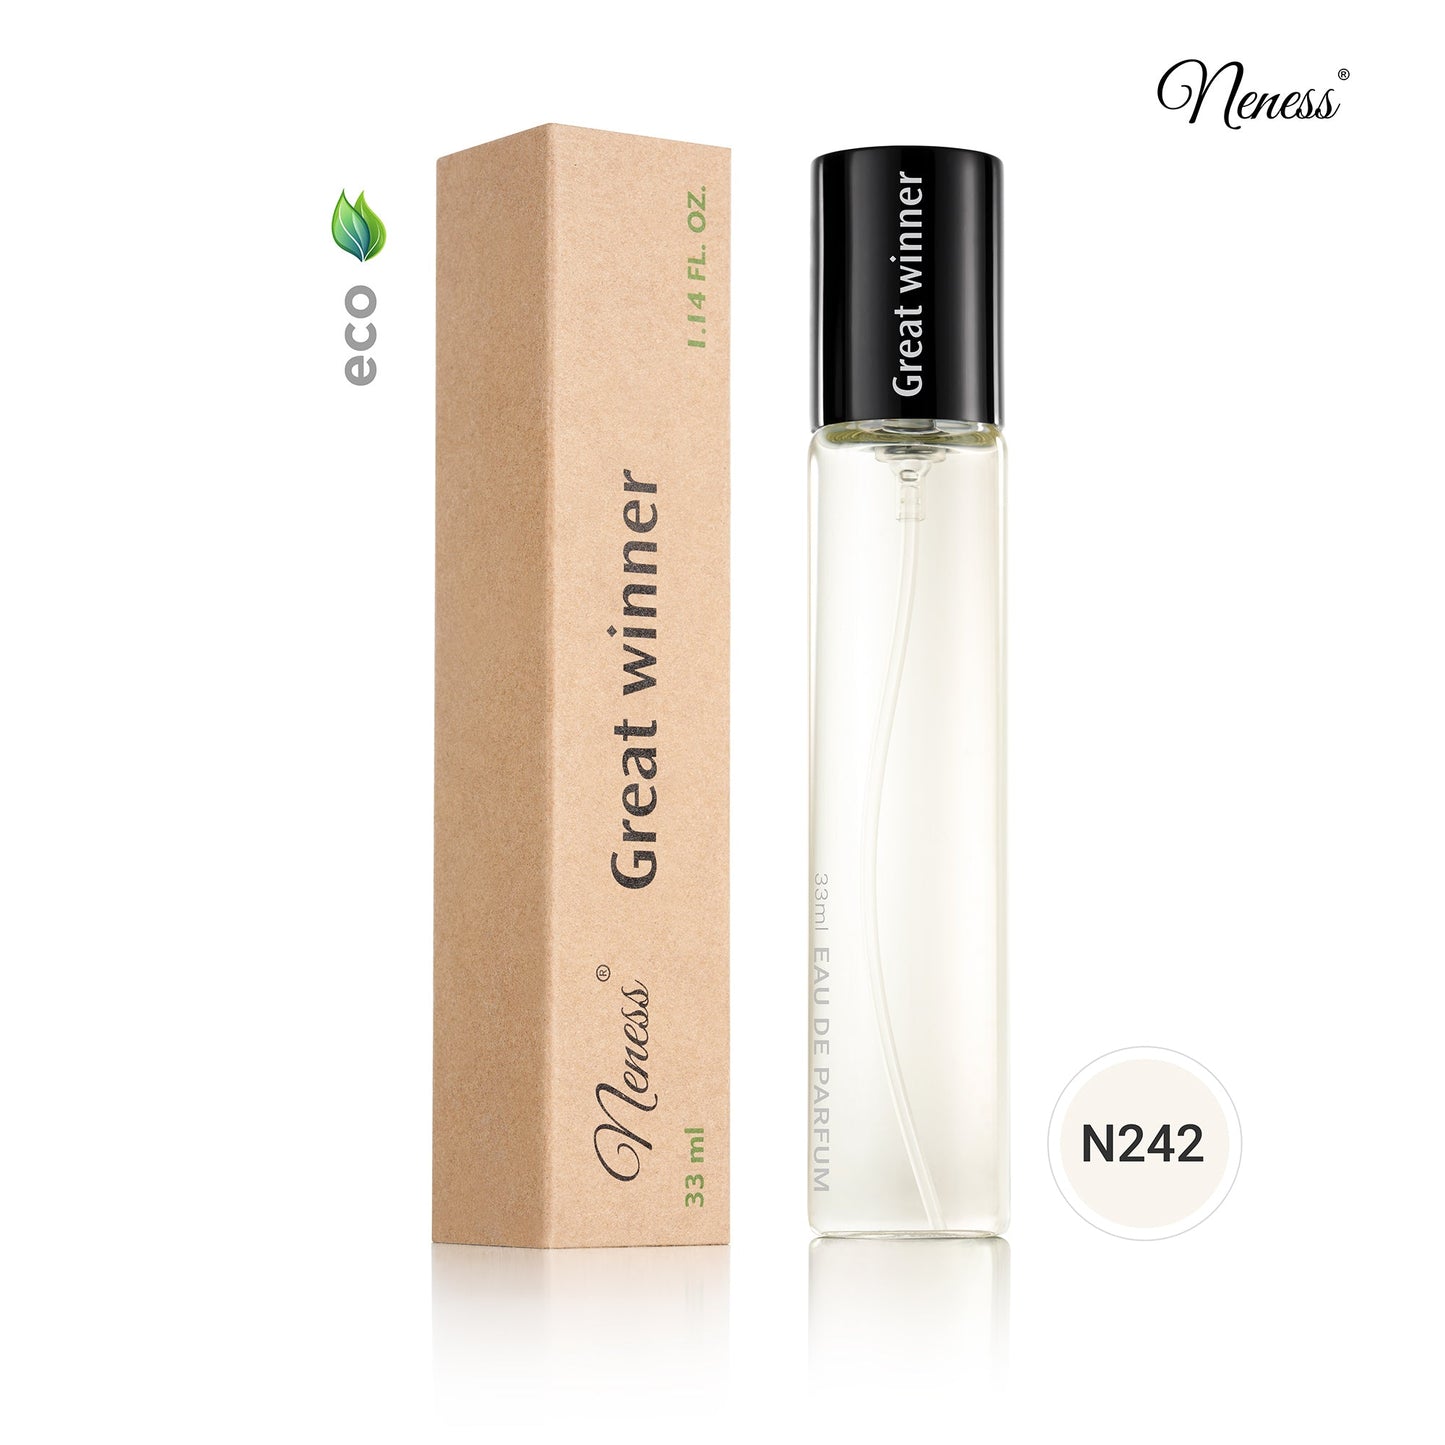 N242. Neness Great Winner - 33 ml - Parfums Pour Hommes